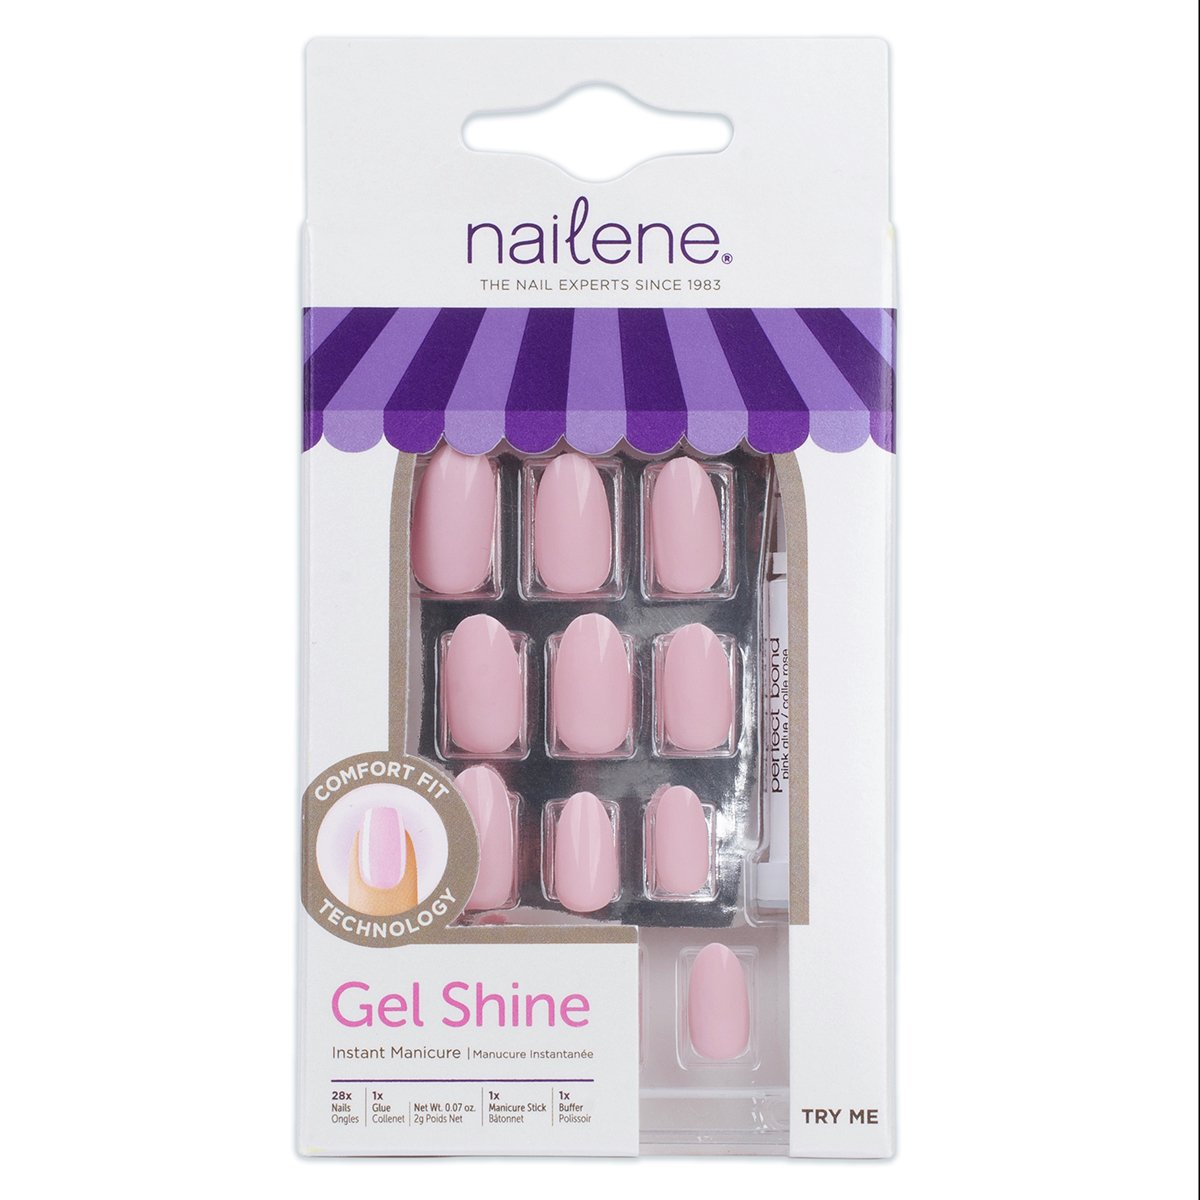 Nailene Gel Shine Stiletto Nails - Pale Pink 28